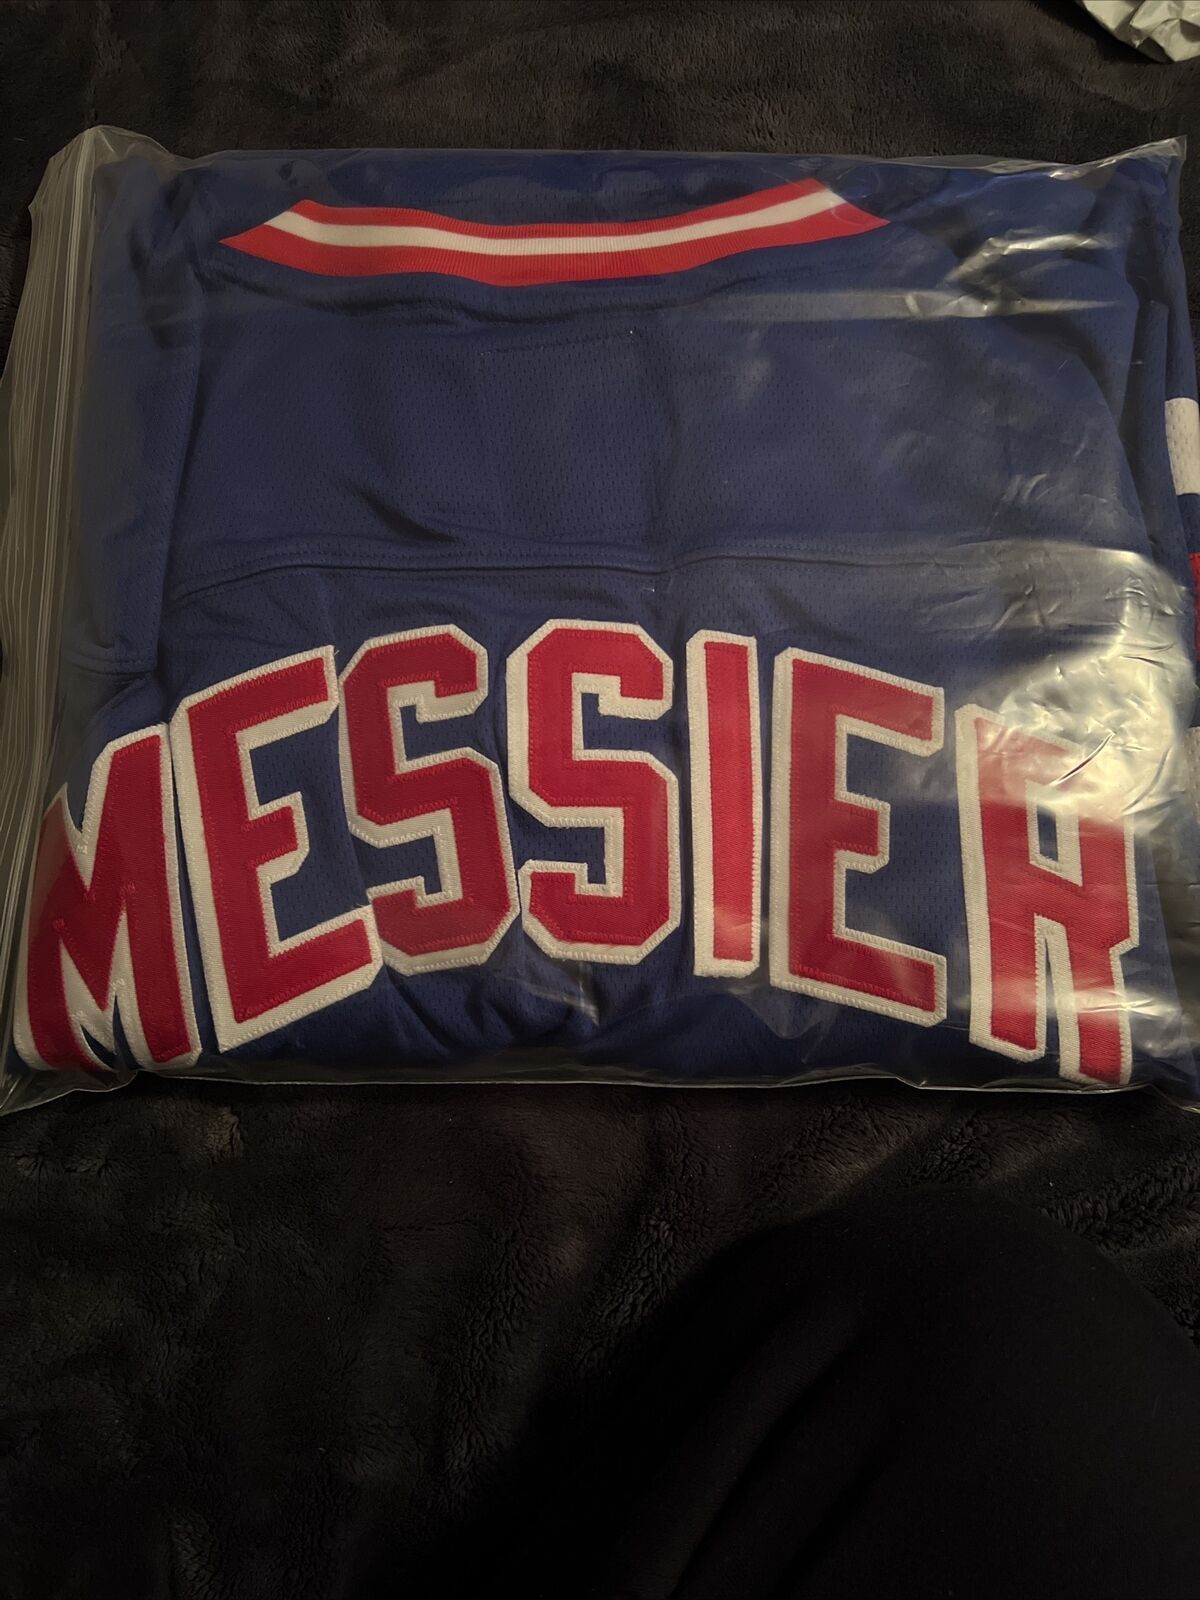 autographed jersey coa Mark Messier New York Rangers